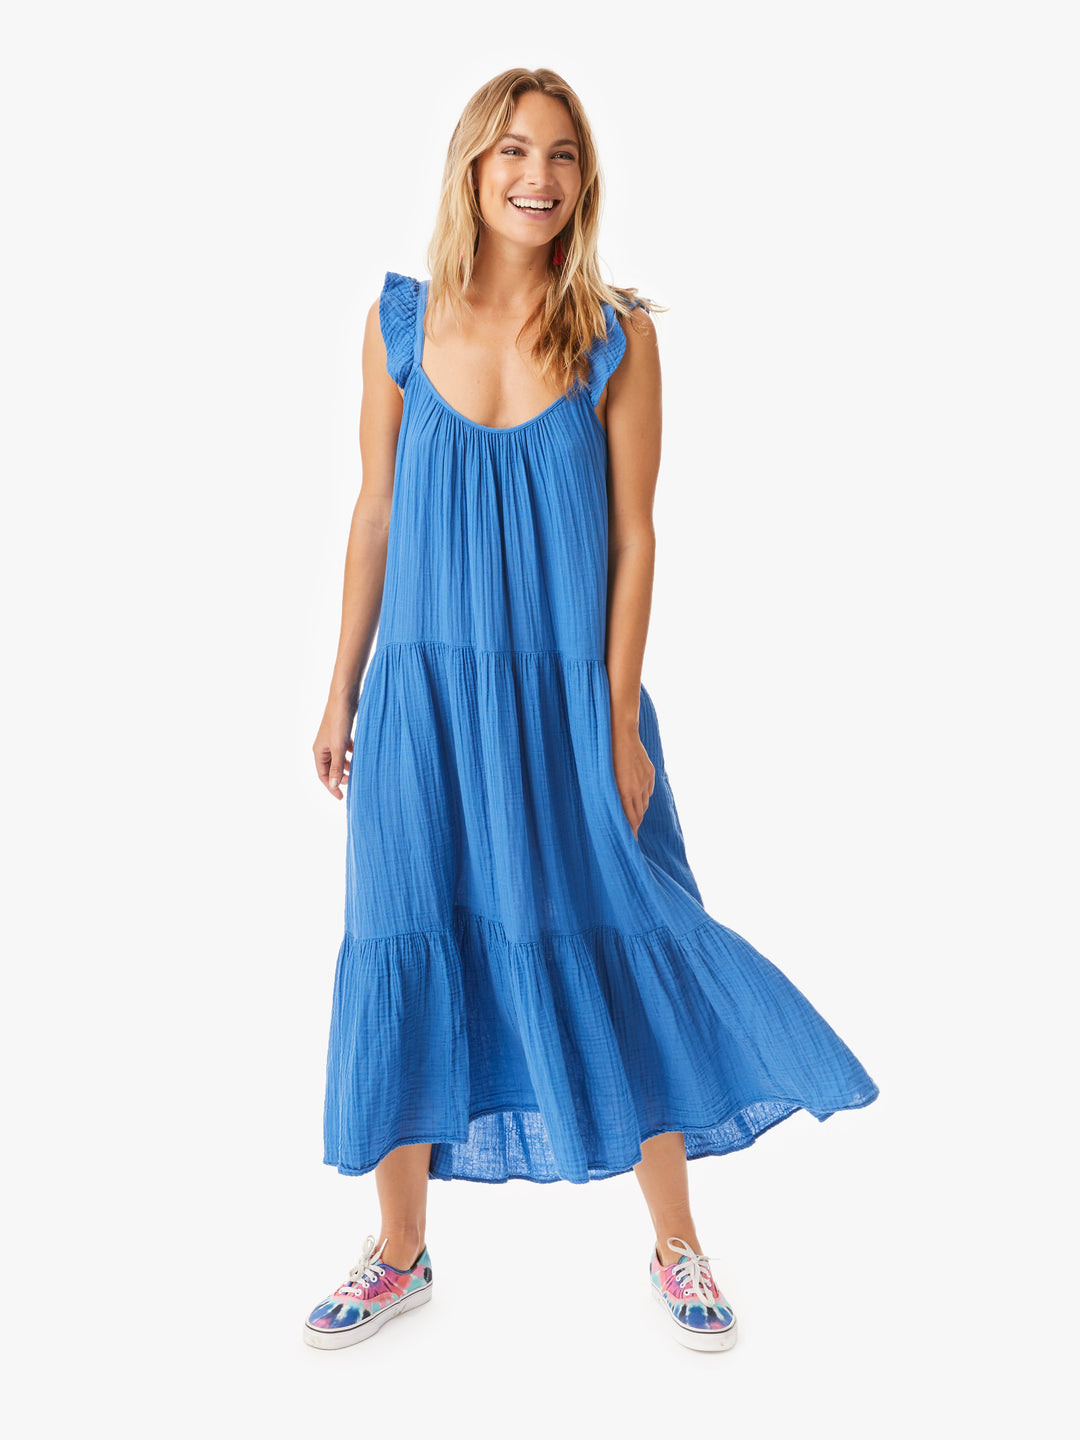 Xirena - Rumer Dress in Blue Spell